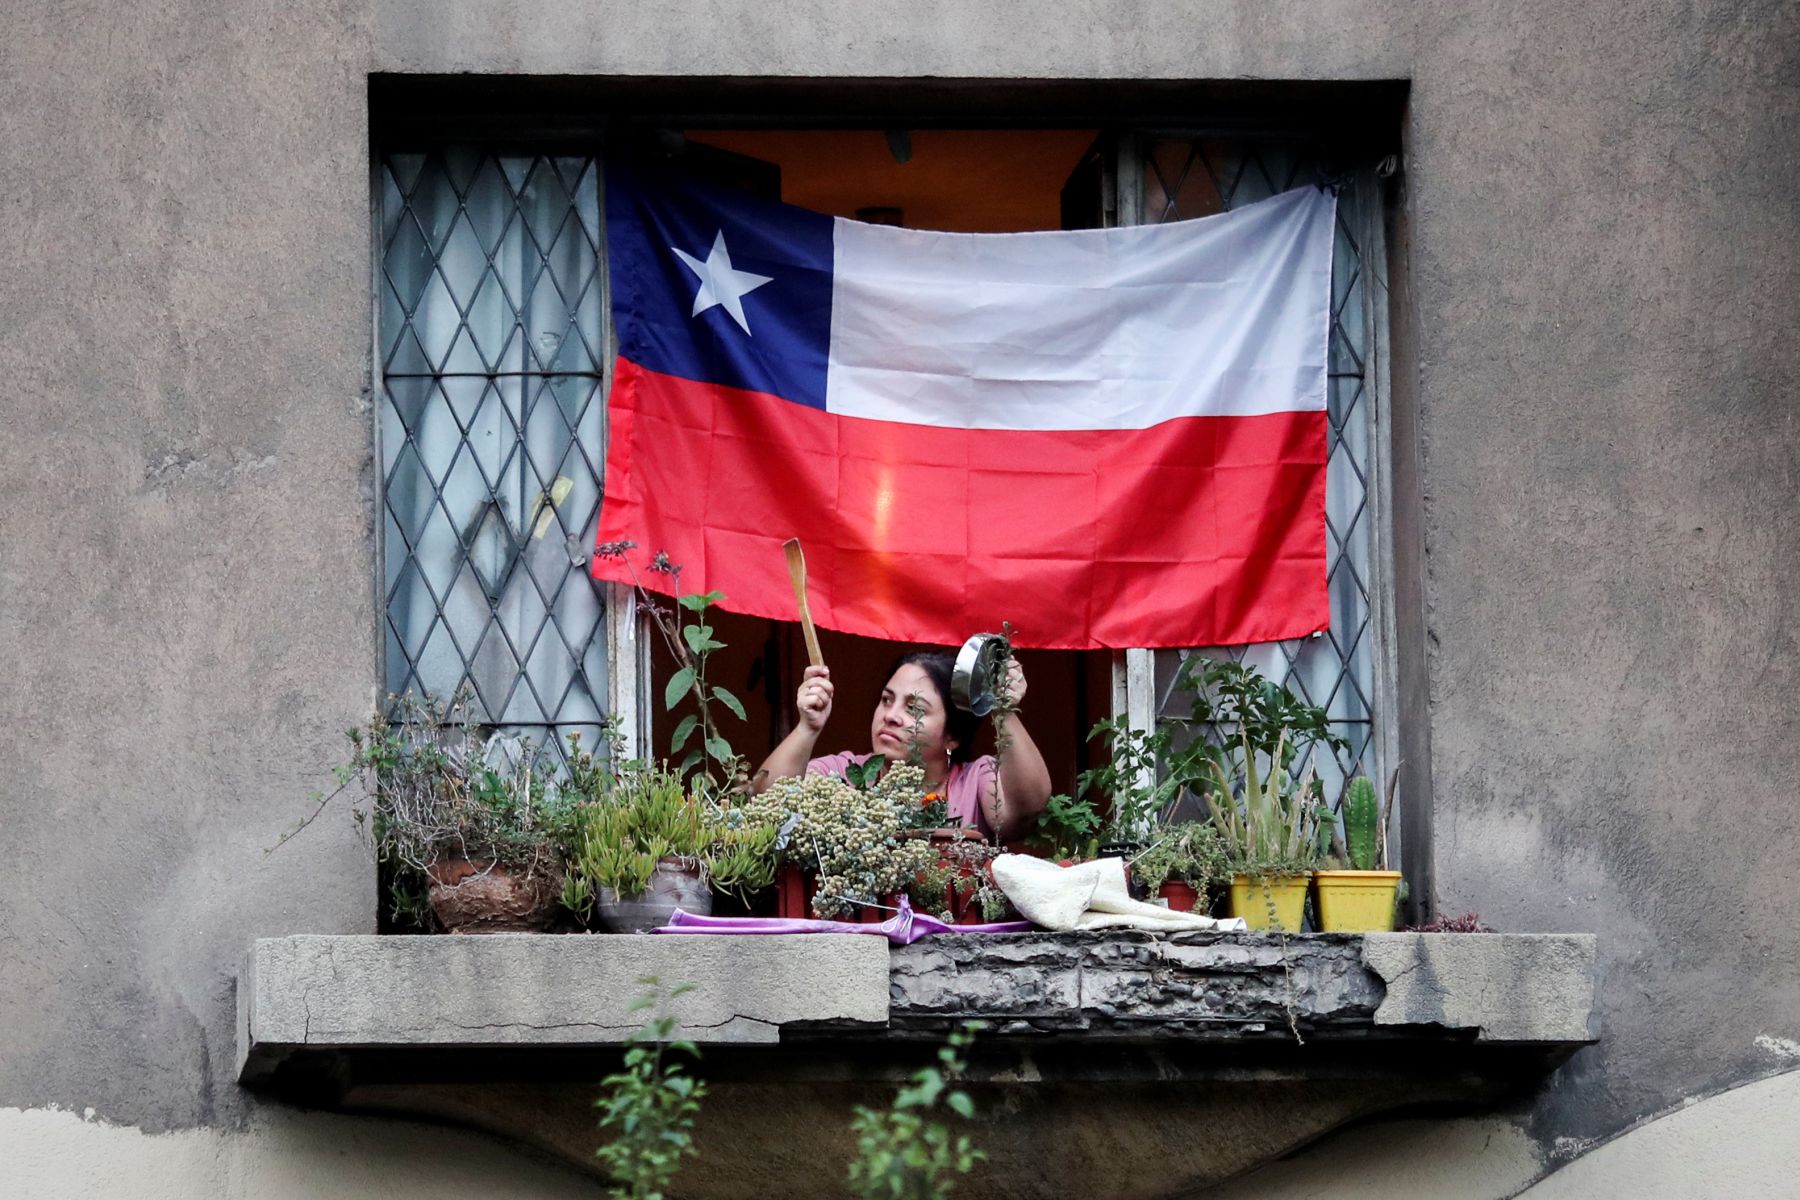 Chili: ‘Niemand wil leiders, want leiders worden ofwel omgekocht ofwel vermoord’